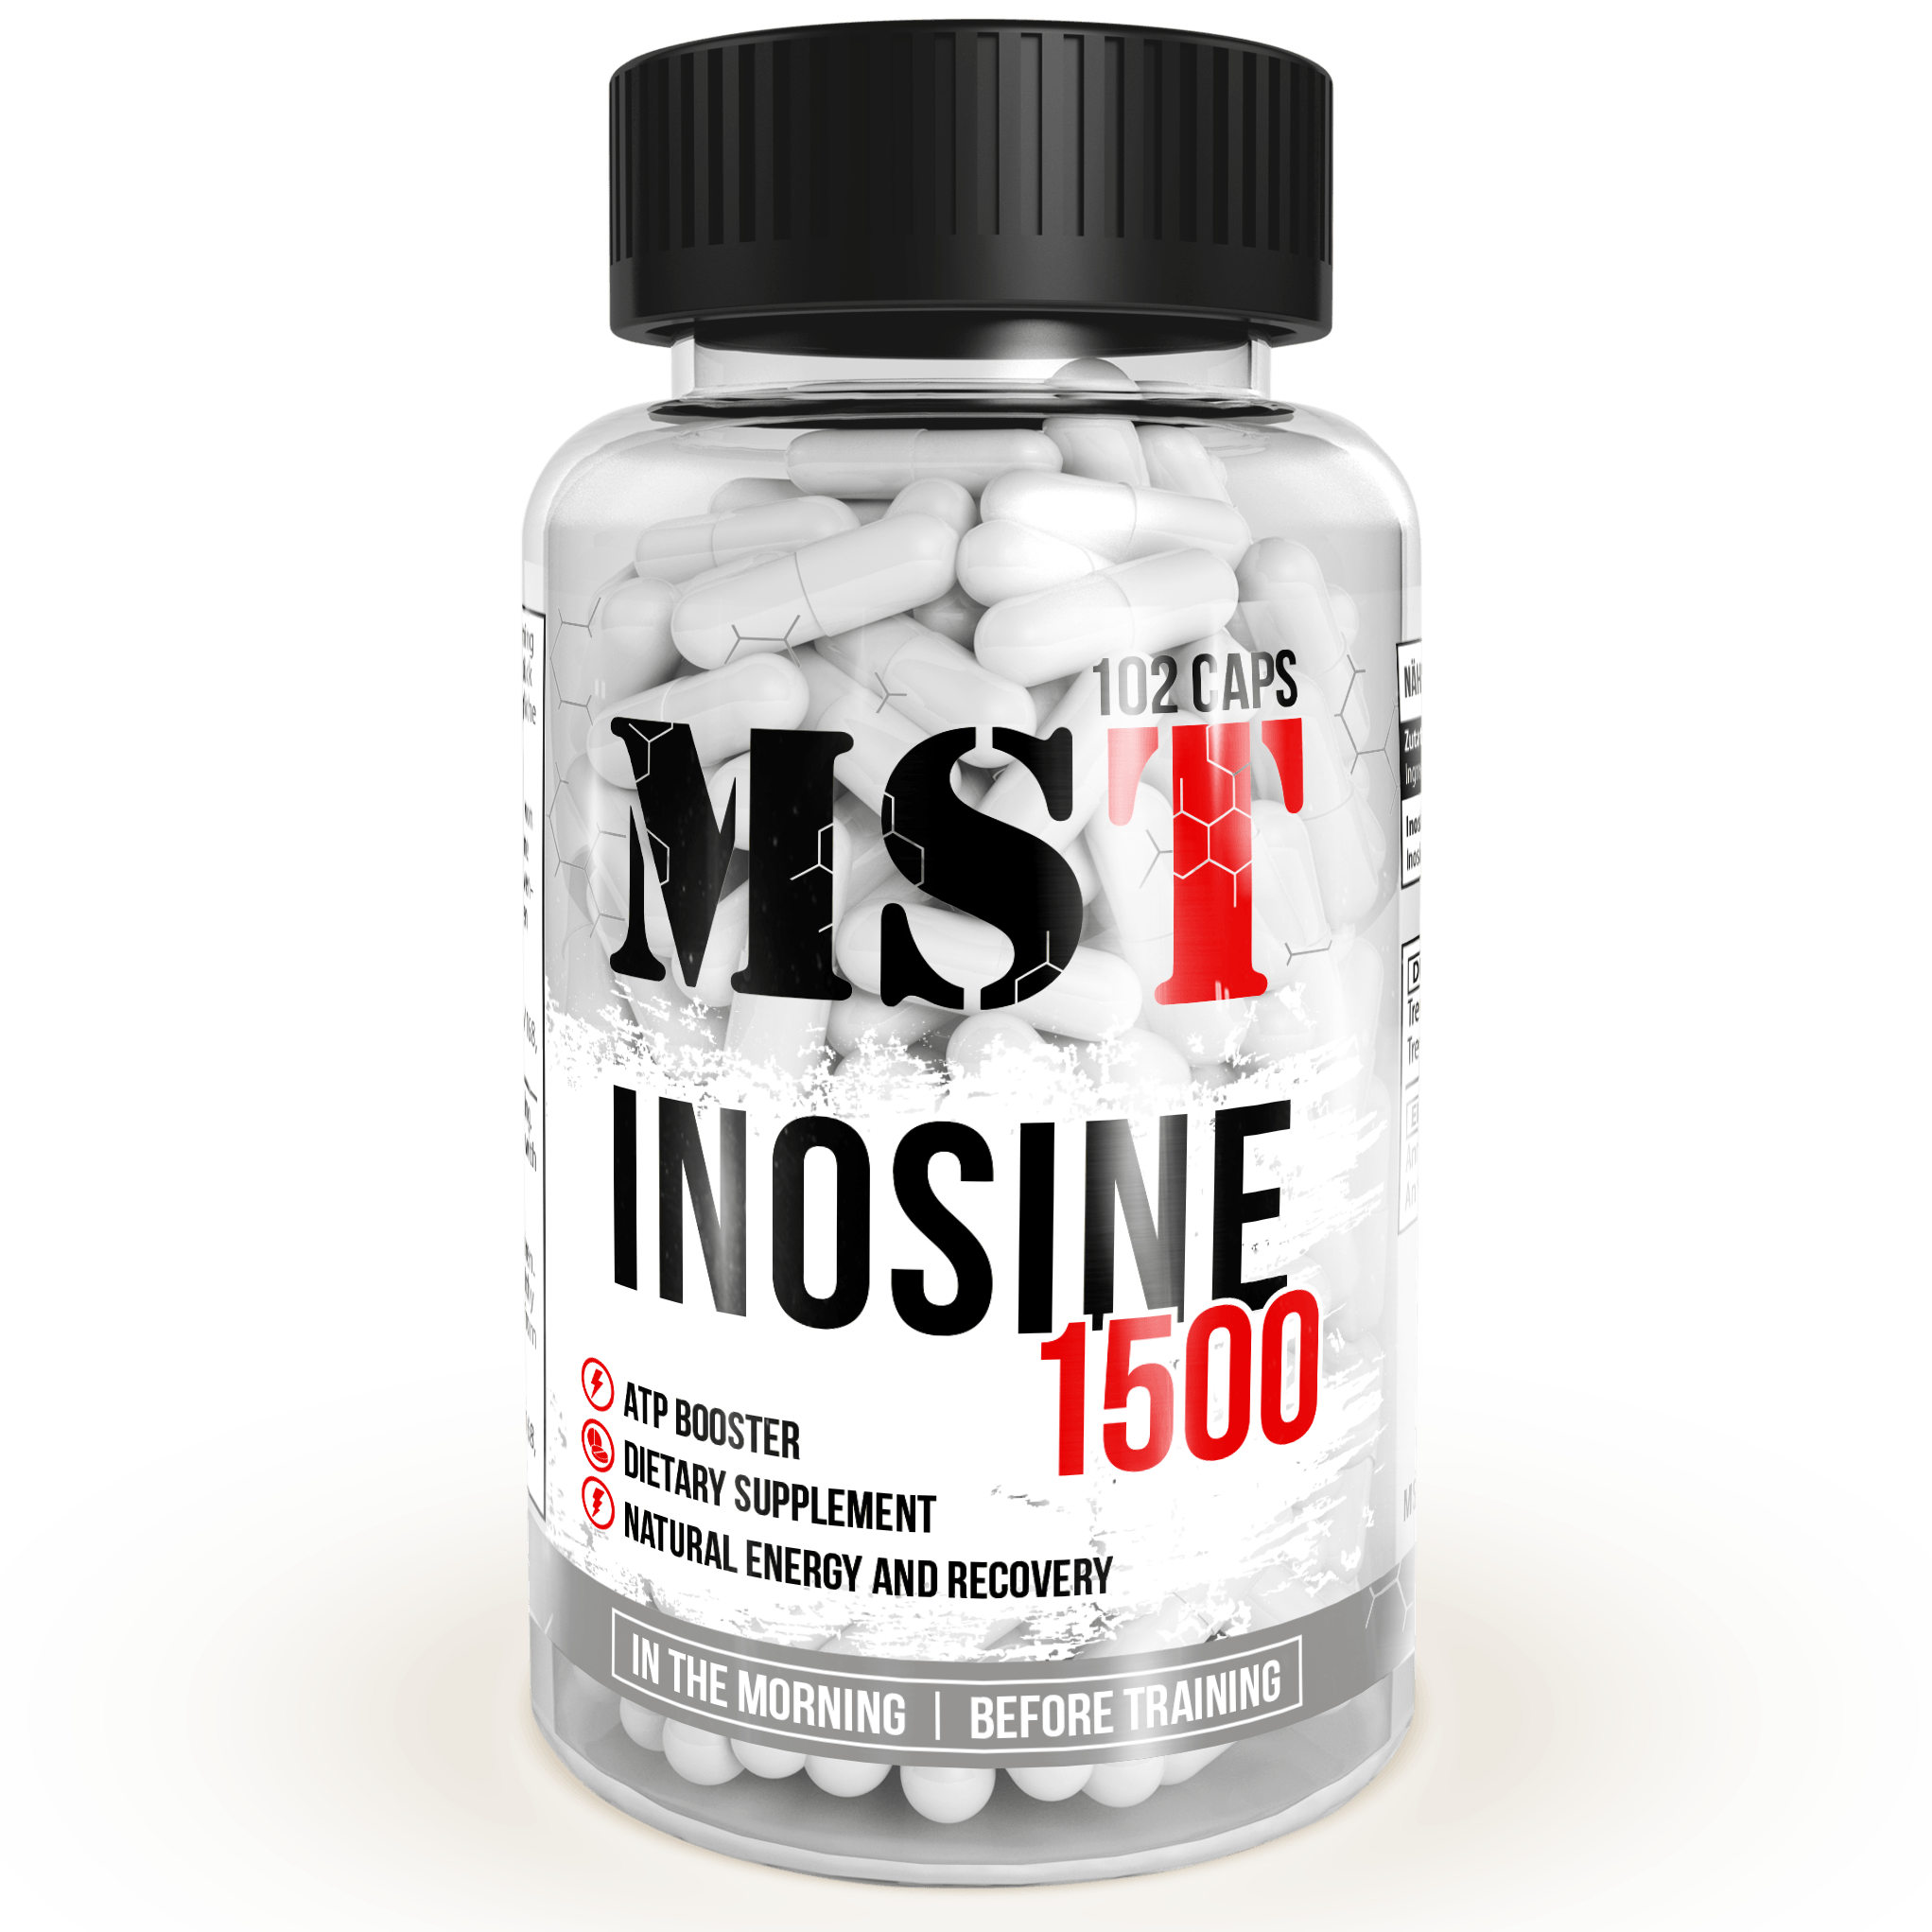 Inosine 1500, 102 pcs, MST Nutrition. Special supplements. 